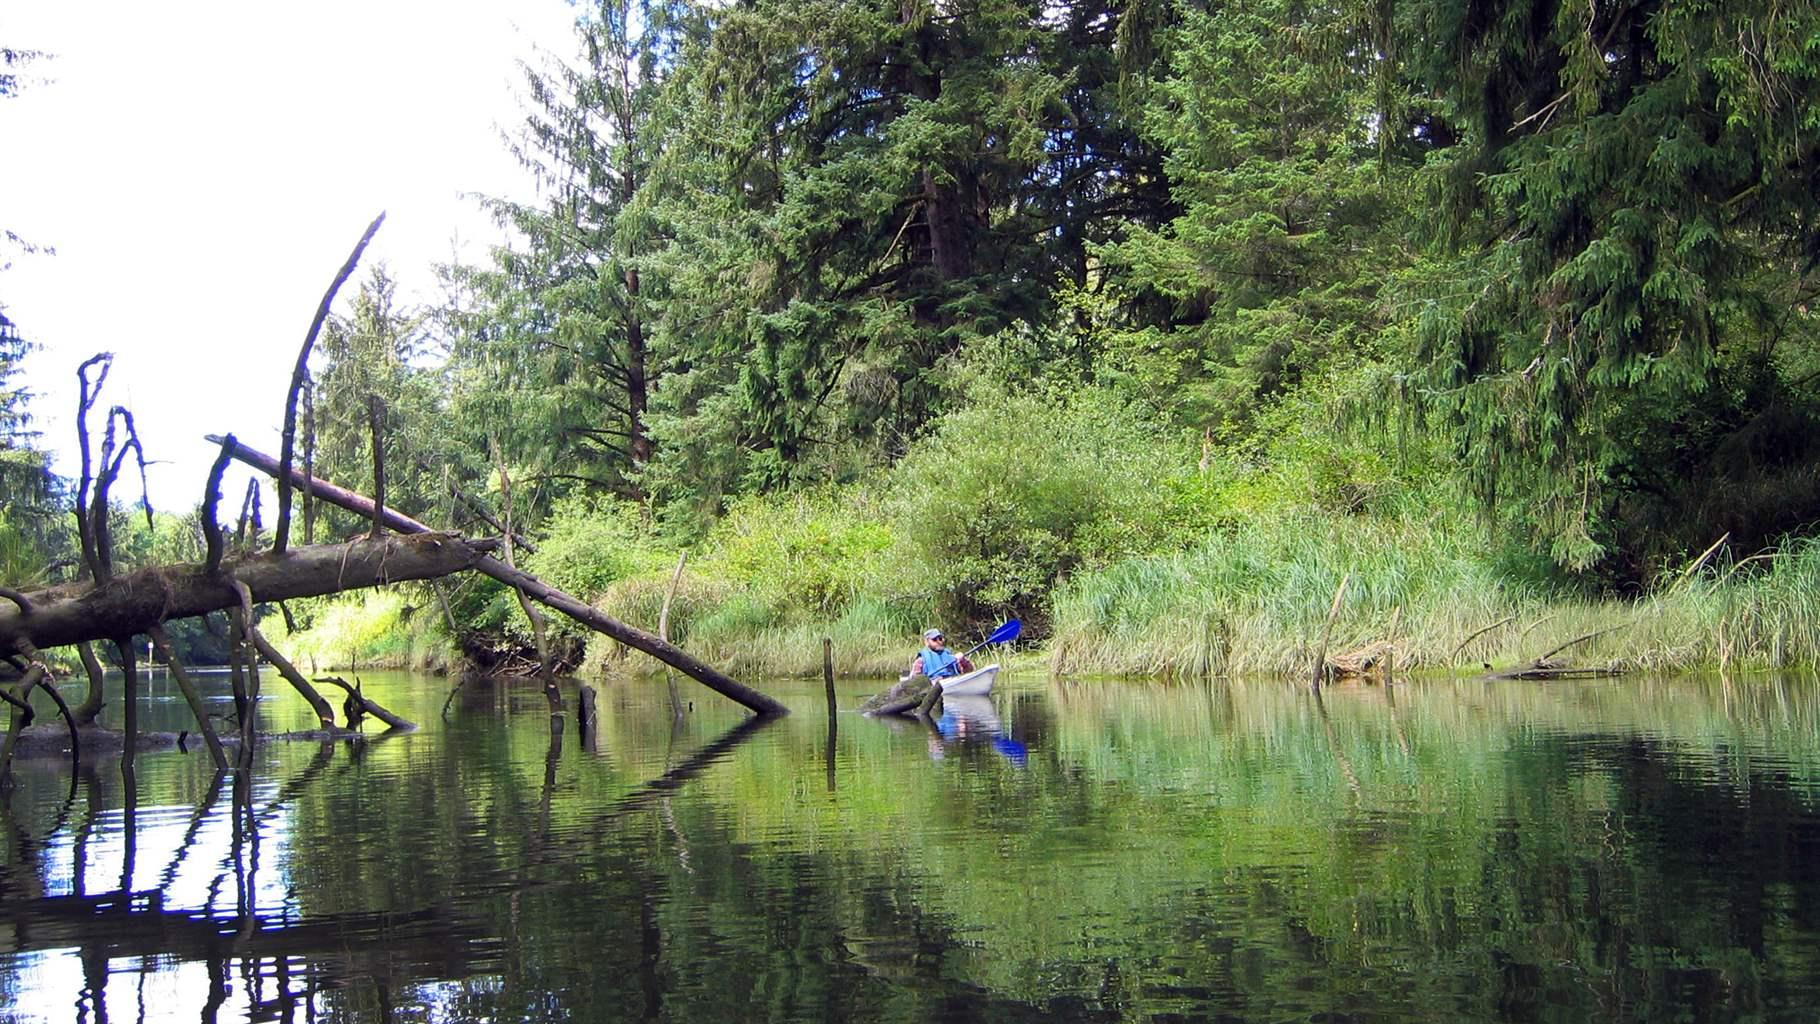 A kayaker enjoys paddling through a tidal swamp in the Nehalem River estuary in Oregon